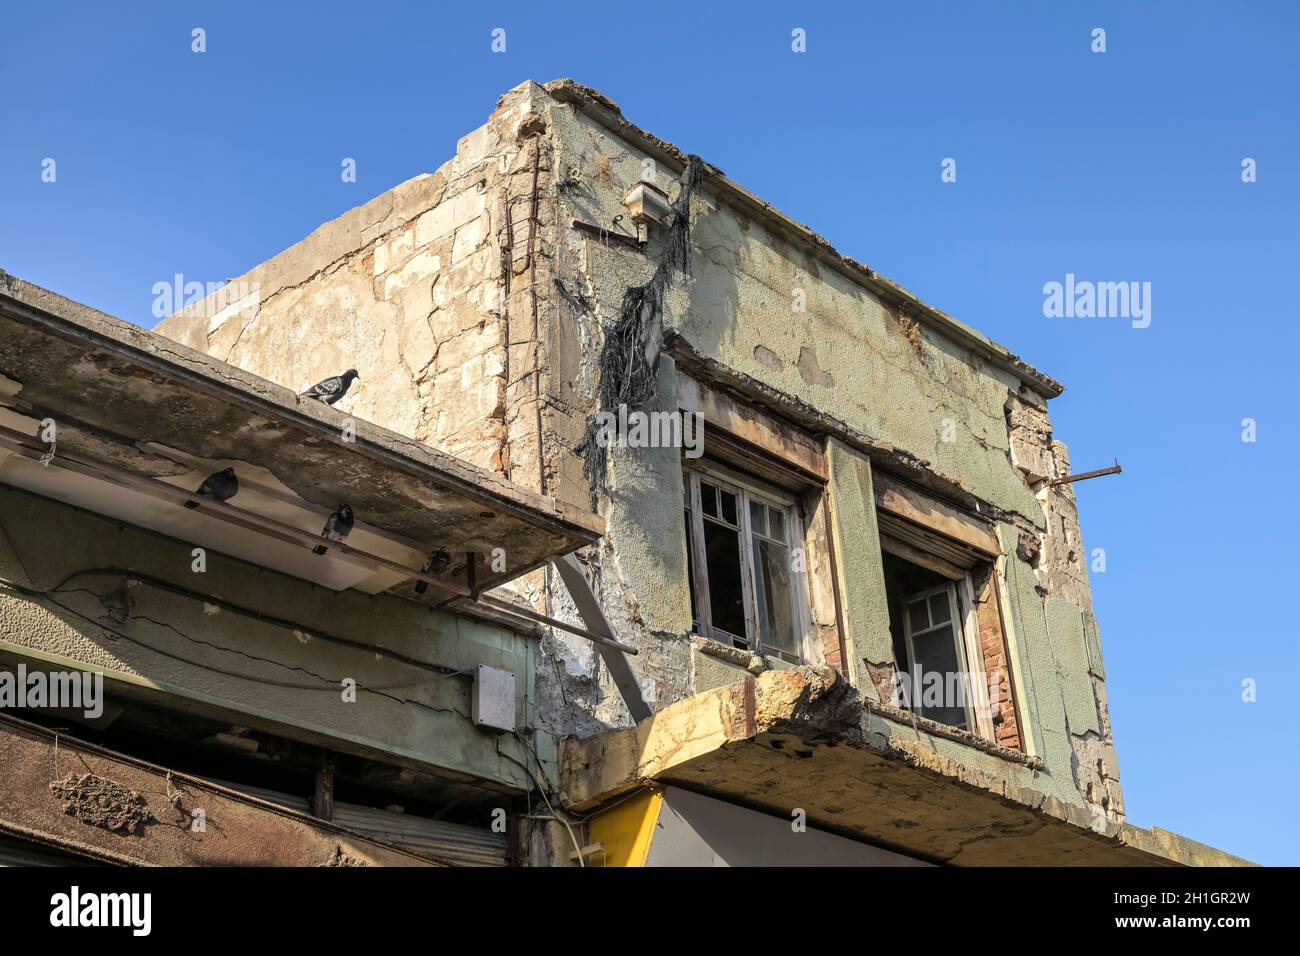 Ruine, Altbau, Splantzia Viertel, Chania, Kreta, Griechenland Stock Photo